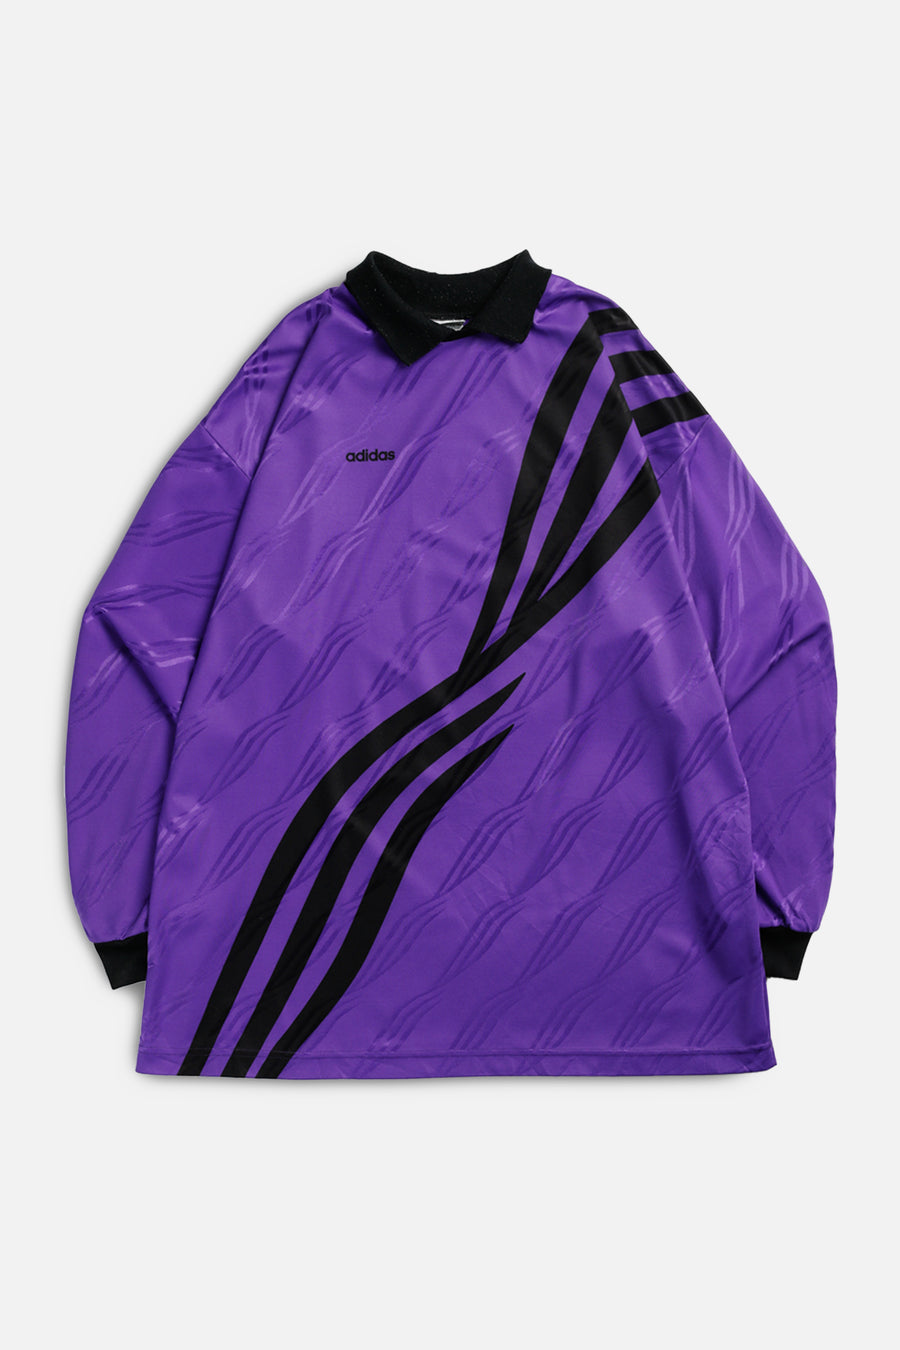 Vintage Adidas Soccer Jersey - XL